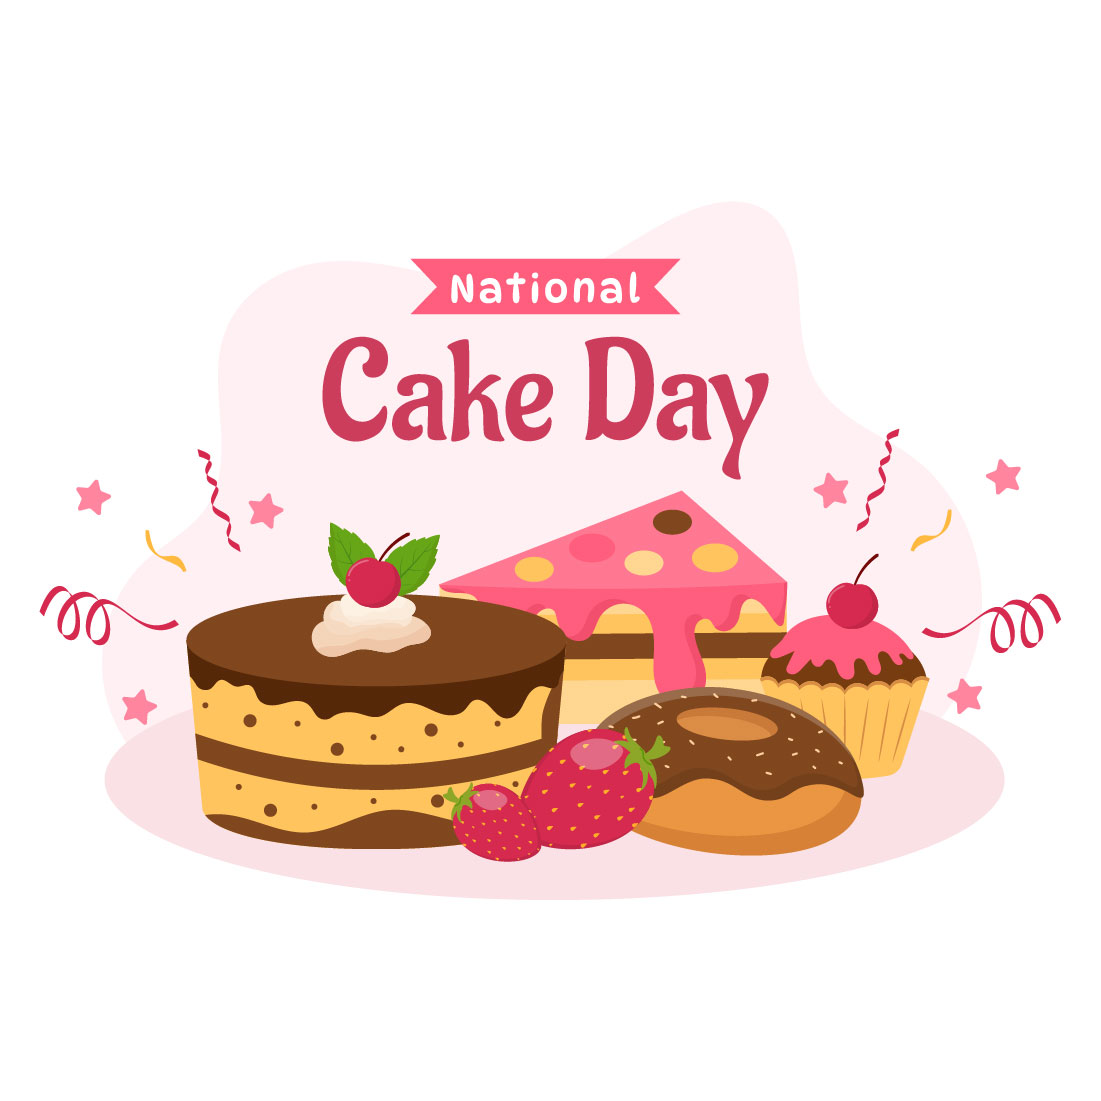 Cake Day – Fun Holiday